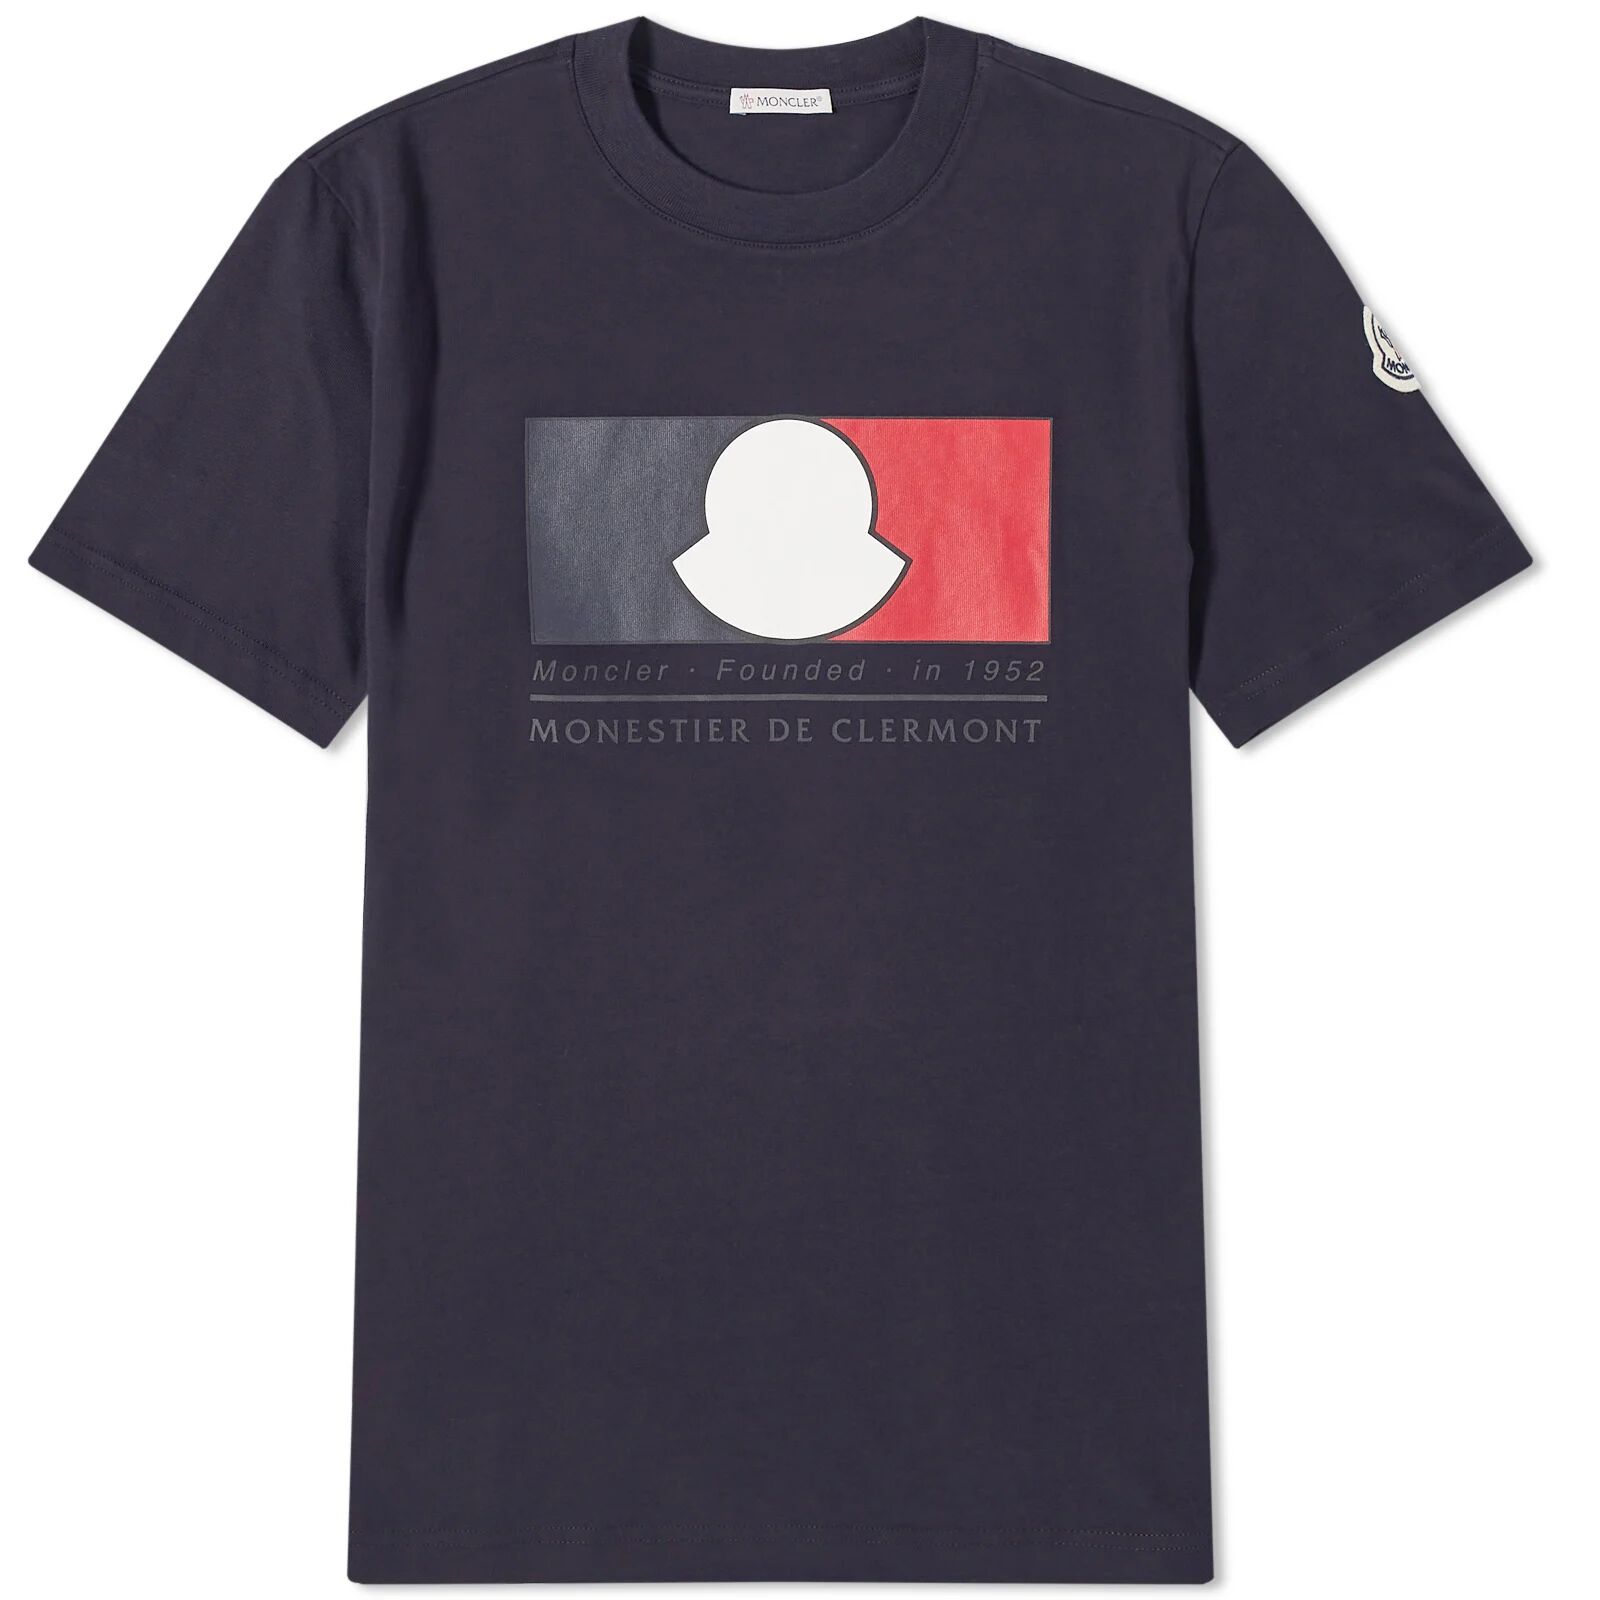 Moncler Men's Box Logo T-Shirt in Navy, Size Small